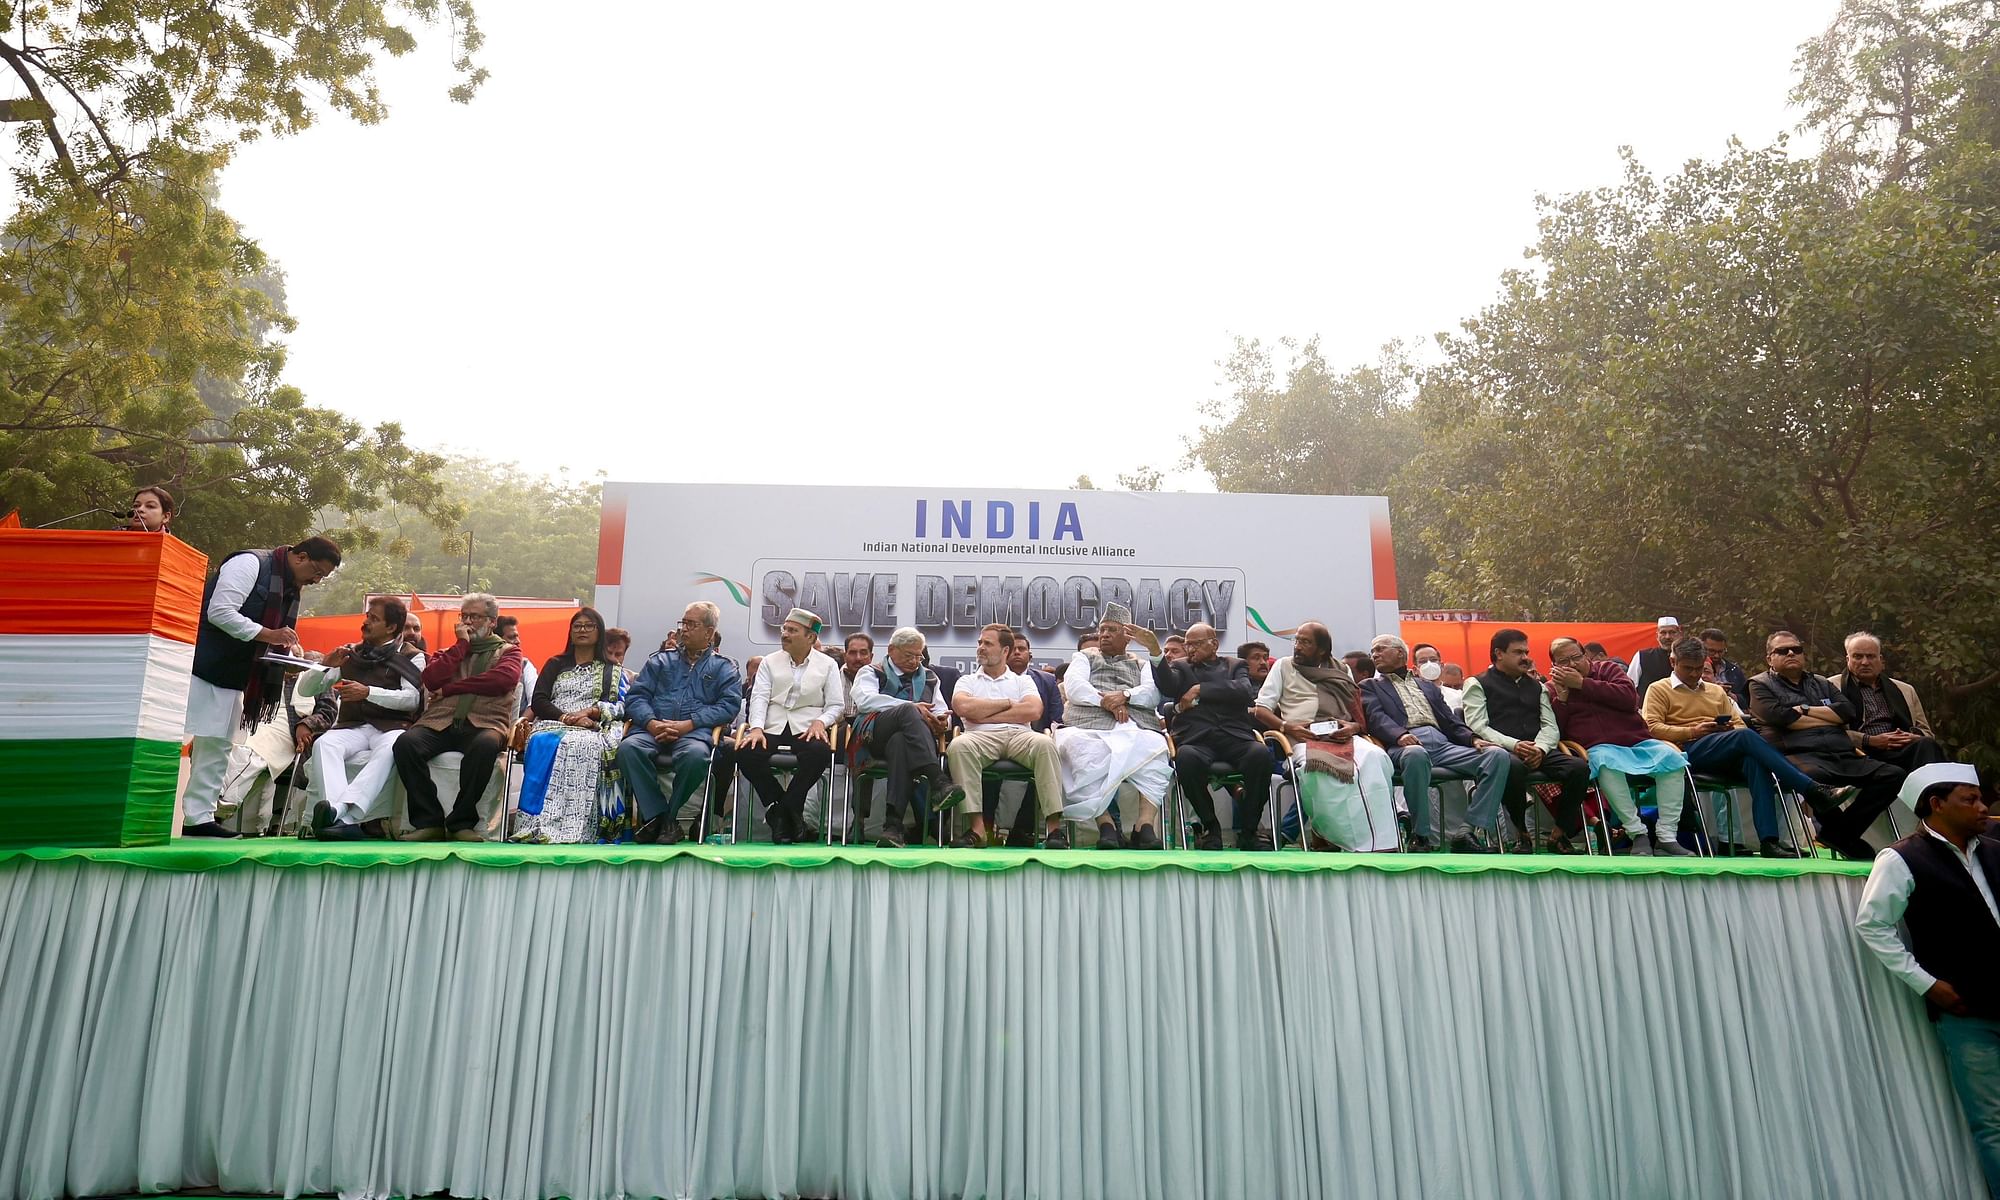 <div class="paragraphs"><p>INDIA bloc leaders react to Kejriwal's arrest.&nbsp;</p></div>